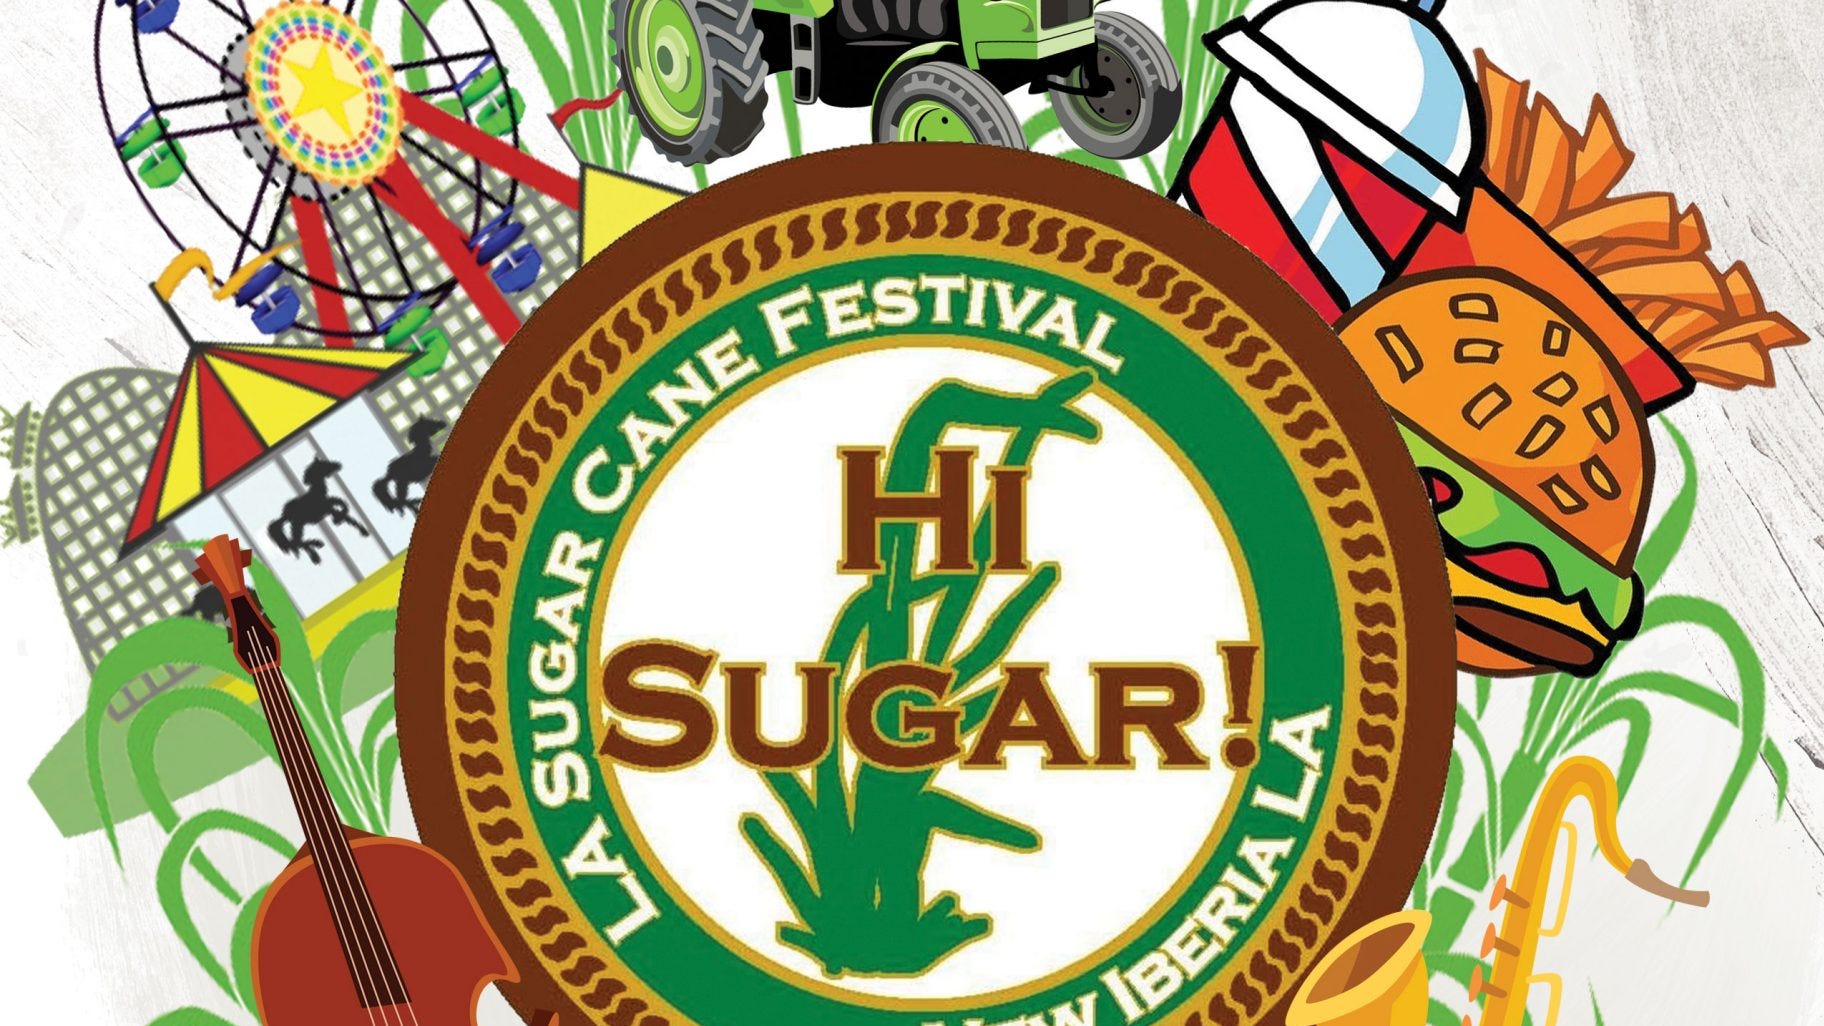 Louisiana Sugar Cane Festival in New Iberia announces 2021 date